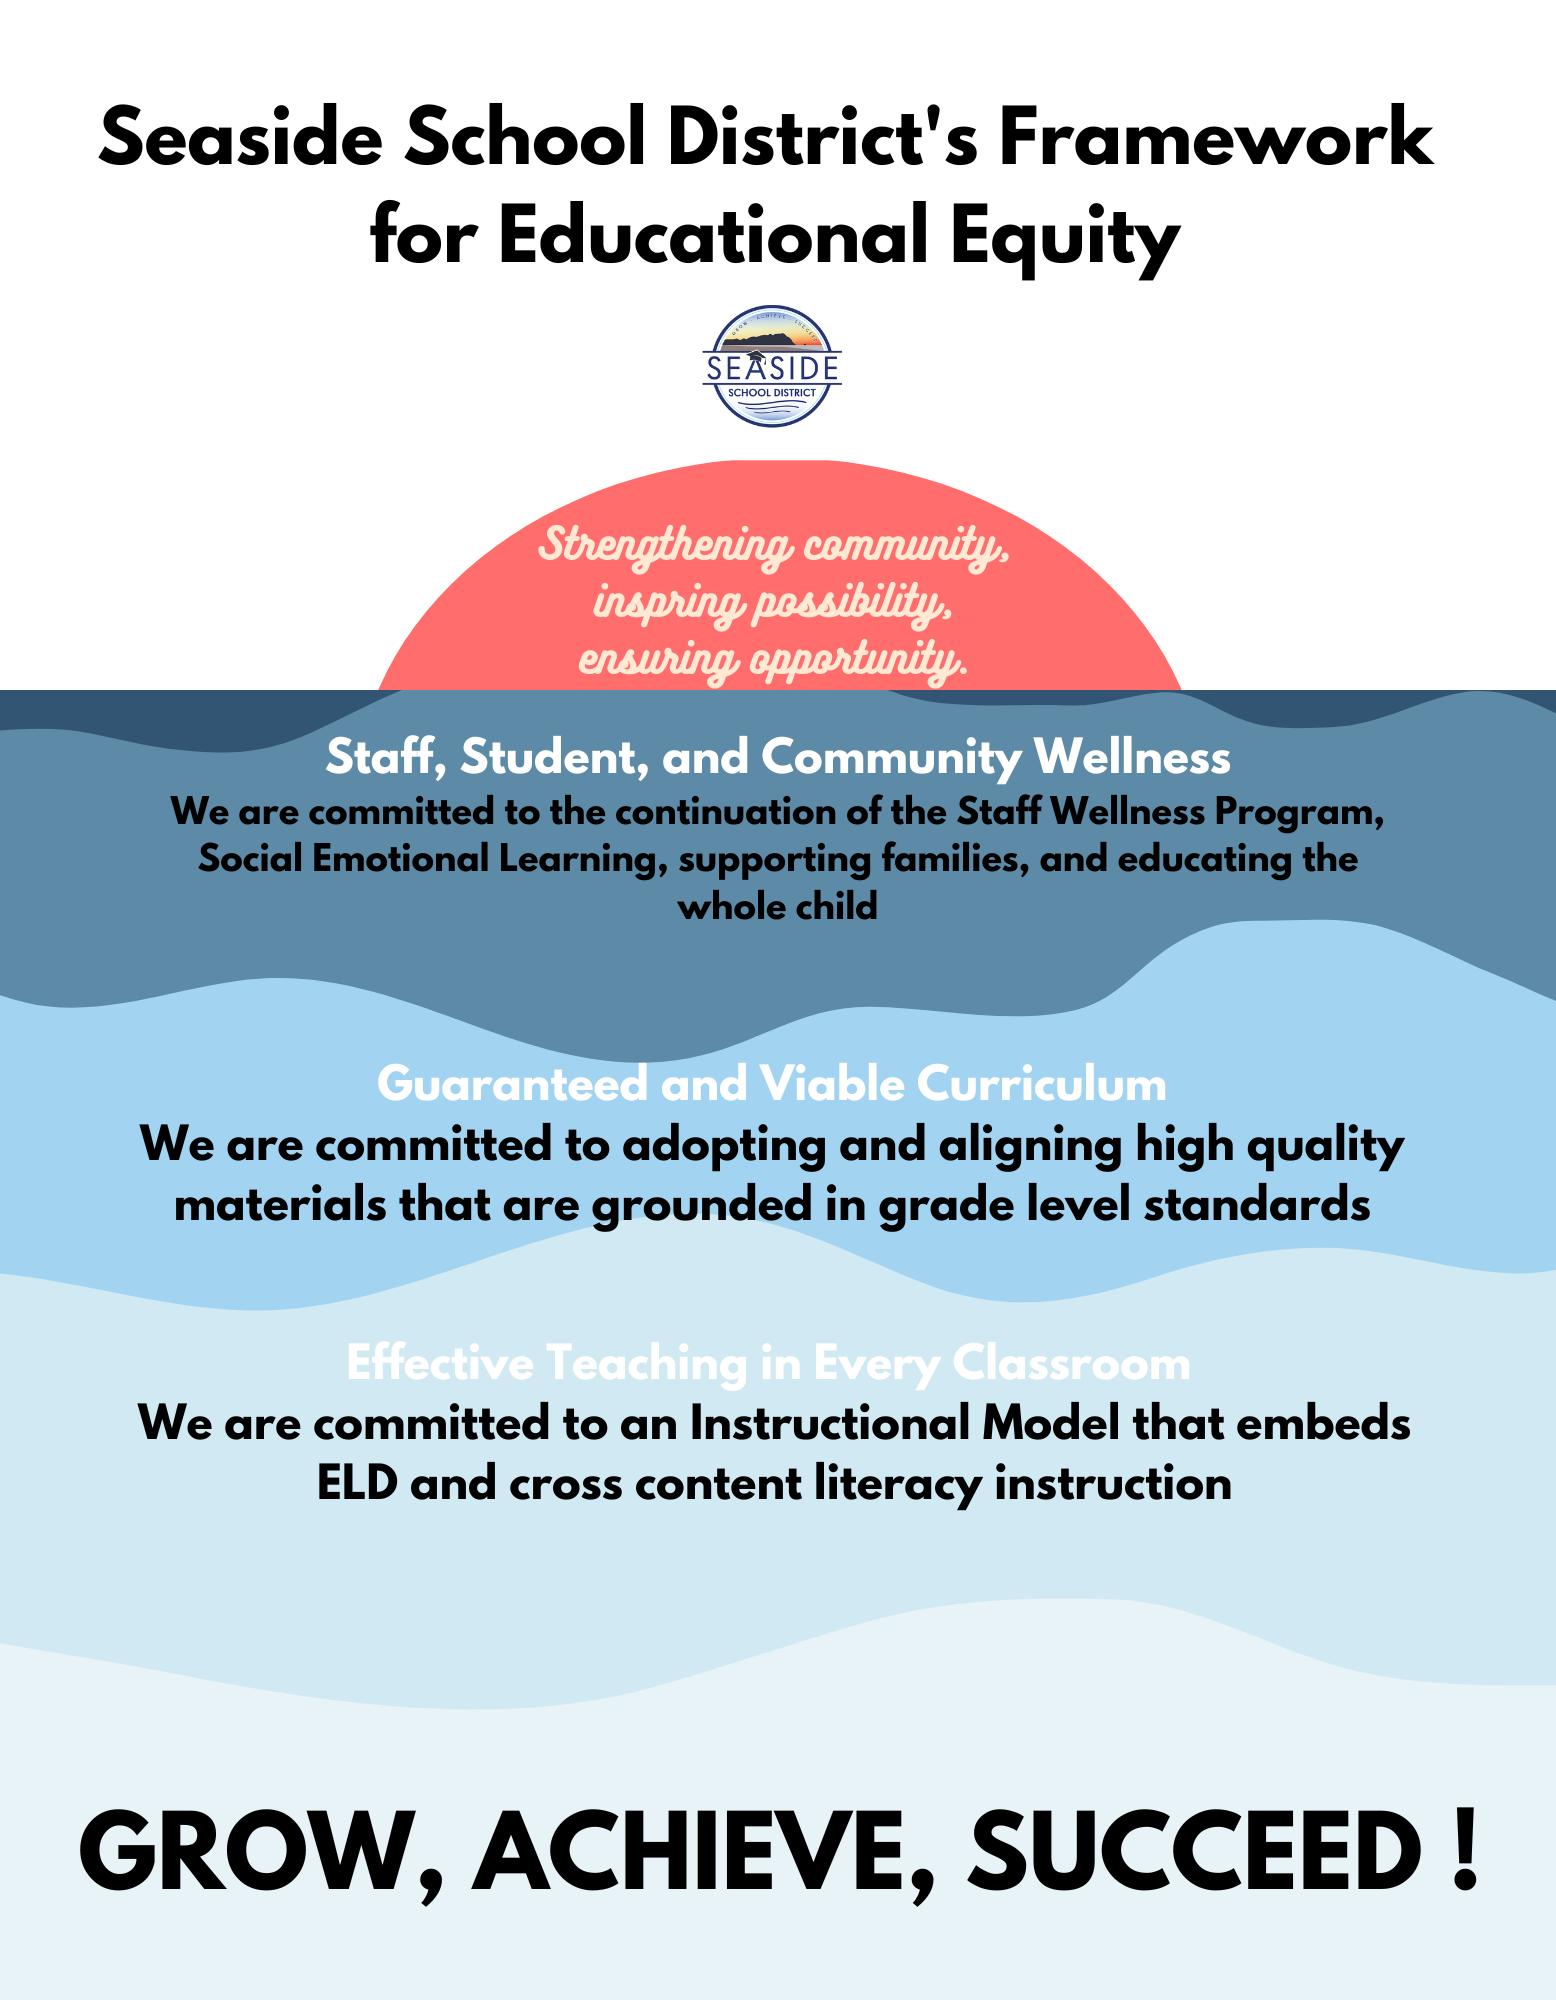 Seaside School District's Framework for Educational Equity